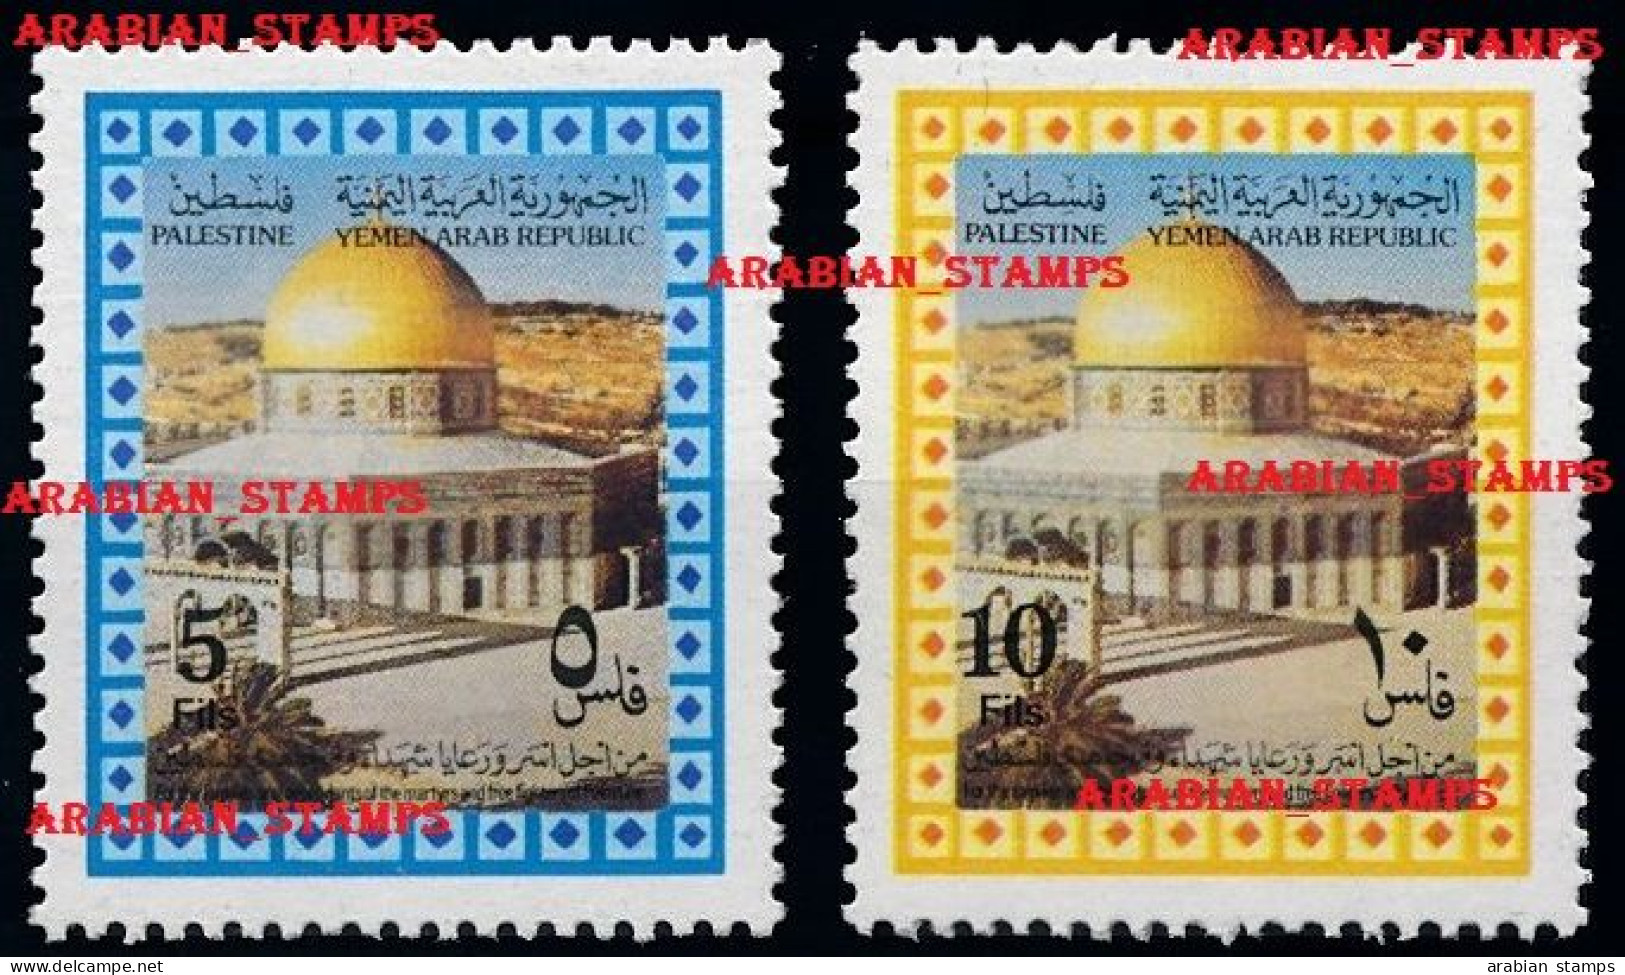 YEMEN ARAB REPUBLIC 1980 PALESTINIAN WELFARE PALESTINE DOME OF THE ROCK JOINT ISSUE - Yemen